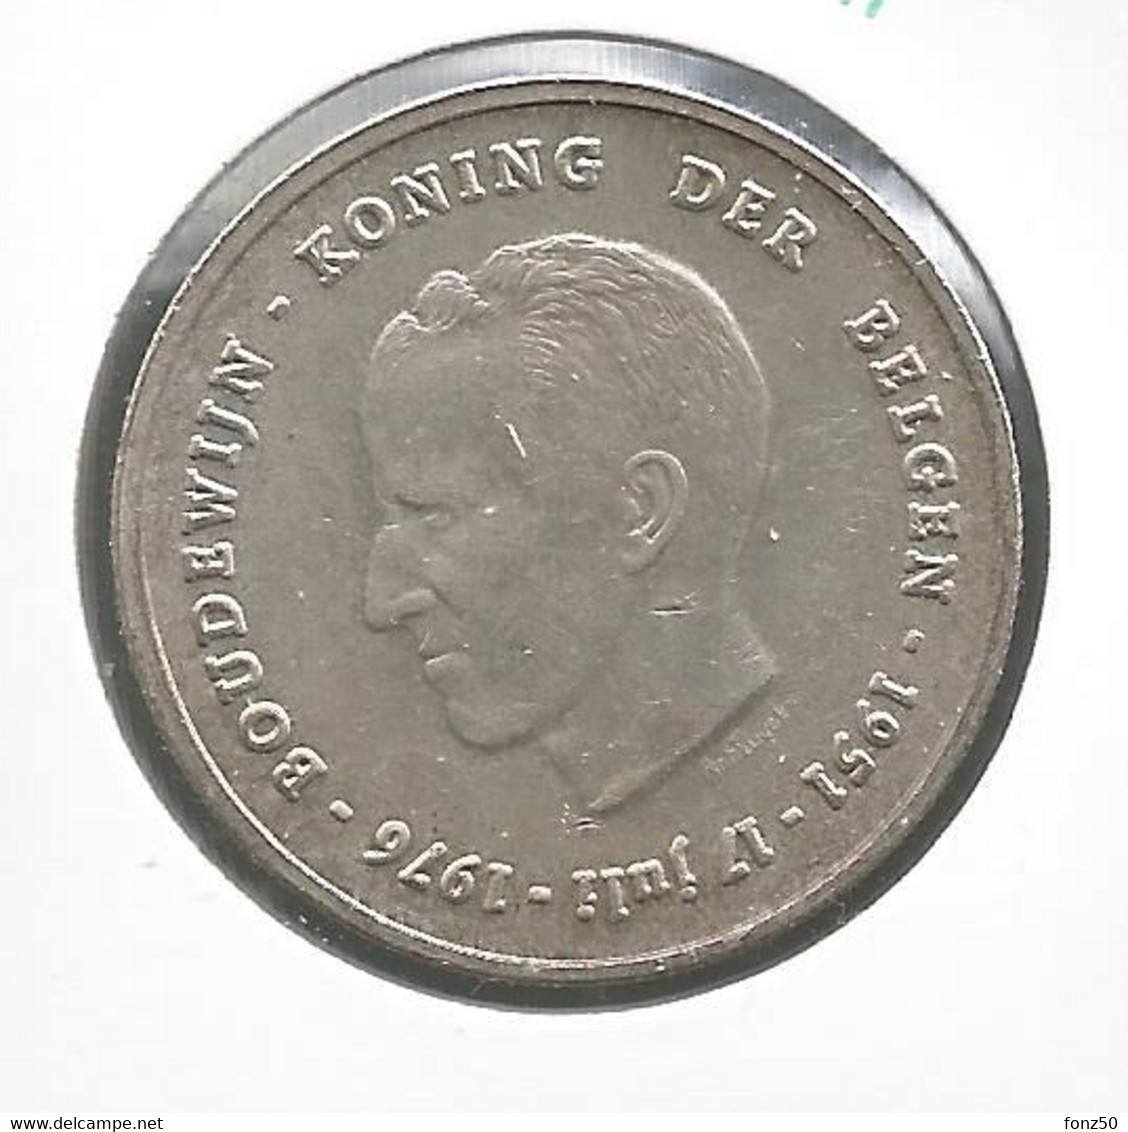 BOUDEWIJN * 250 Frank 1976 Vlaams * Nr 12137 - 250 Francs